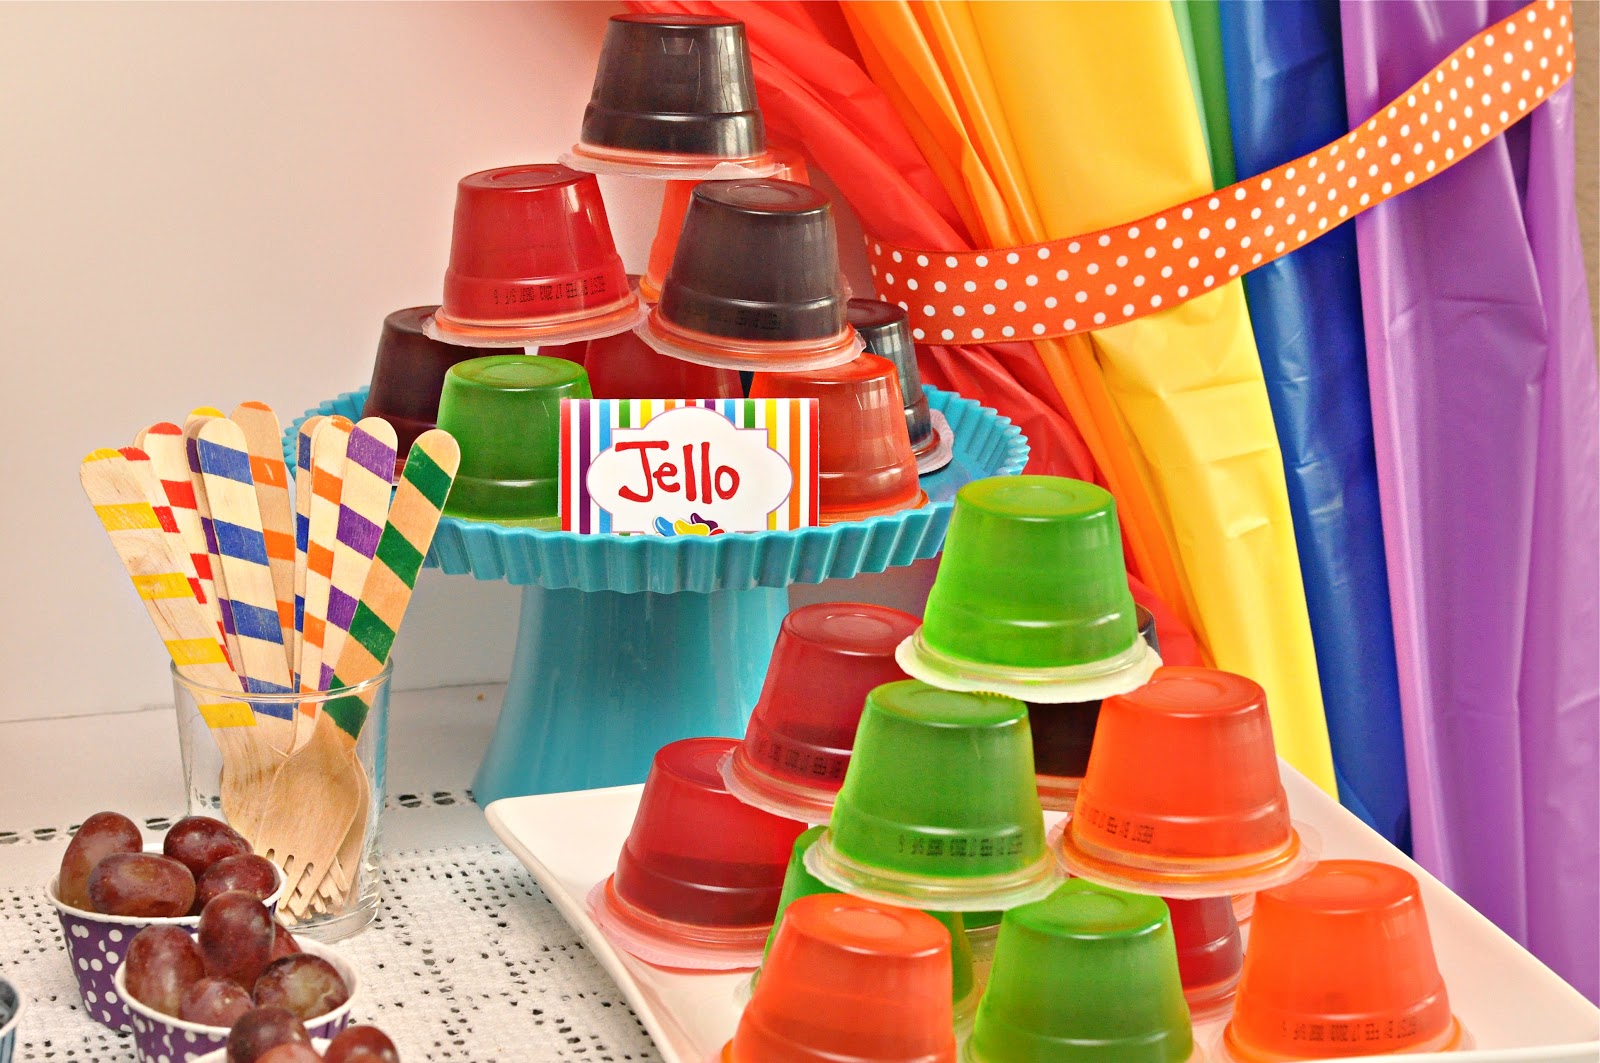 Jelly Bean Birthday Party Ideas and Candy Bar Desserts table -  via BirdsParty.com